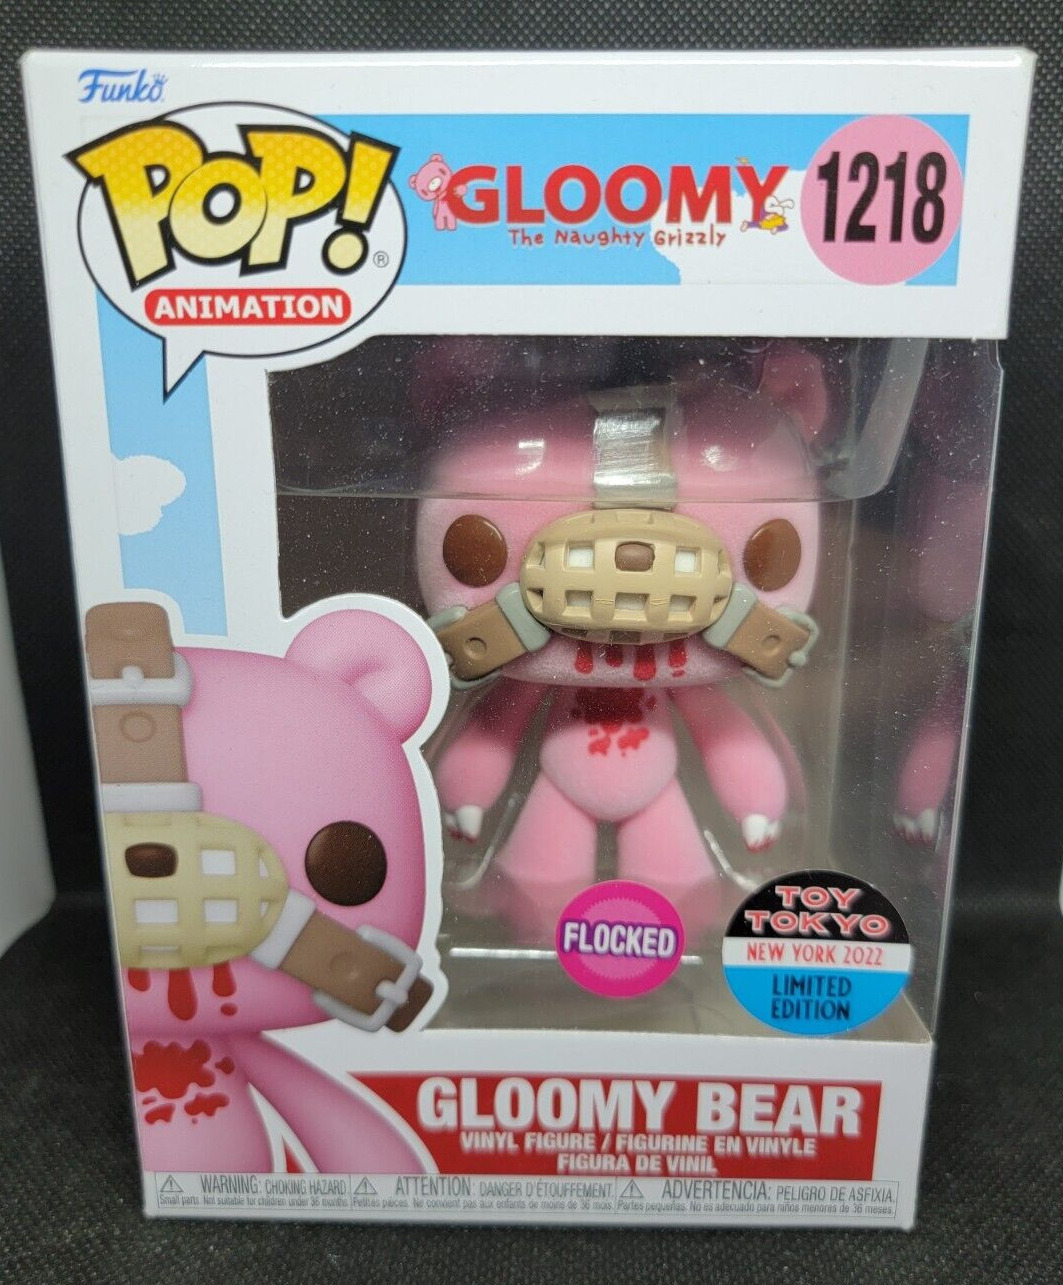 2022 NYCC Toy Tokyo Exclusive Flocked Gloomy Bear Funko Pop Animation 1218